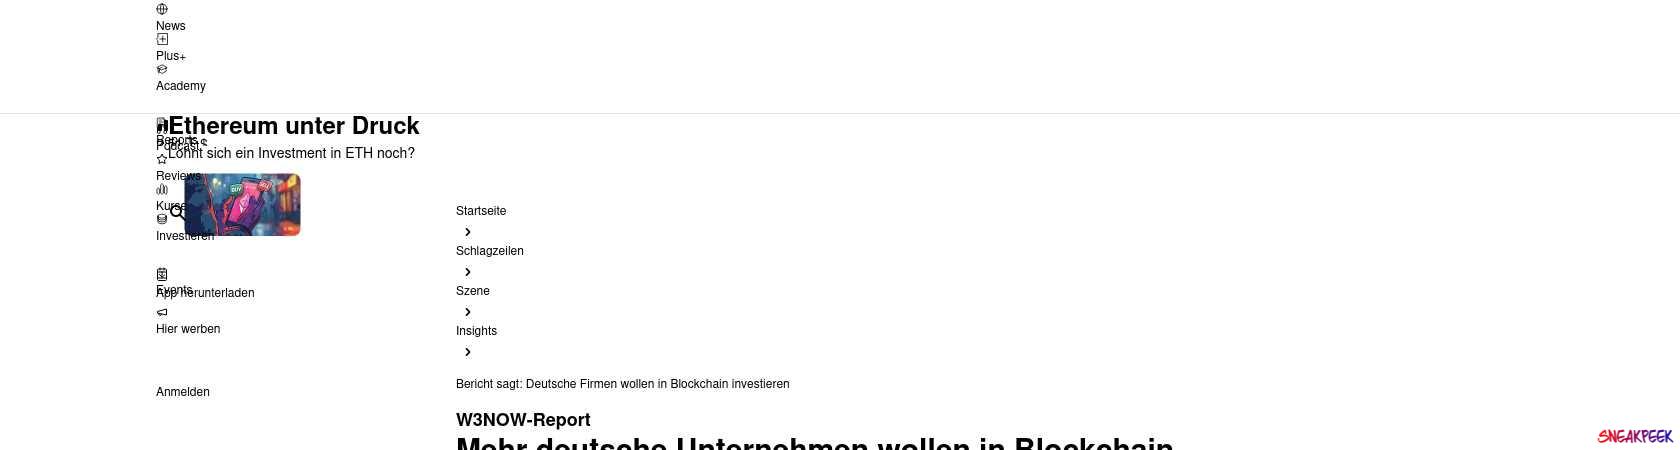 Read the full Article:  ⭲ Bericht sagt: Deutsche Firmen wollen in Blockchain investieren